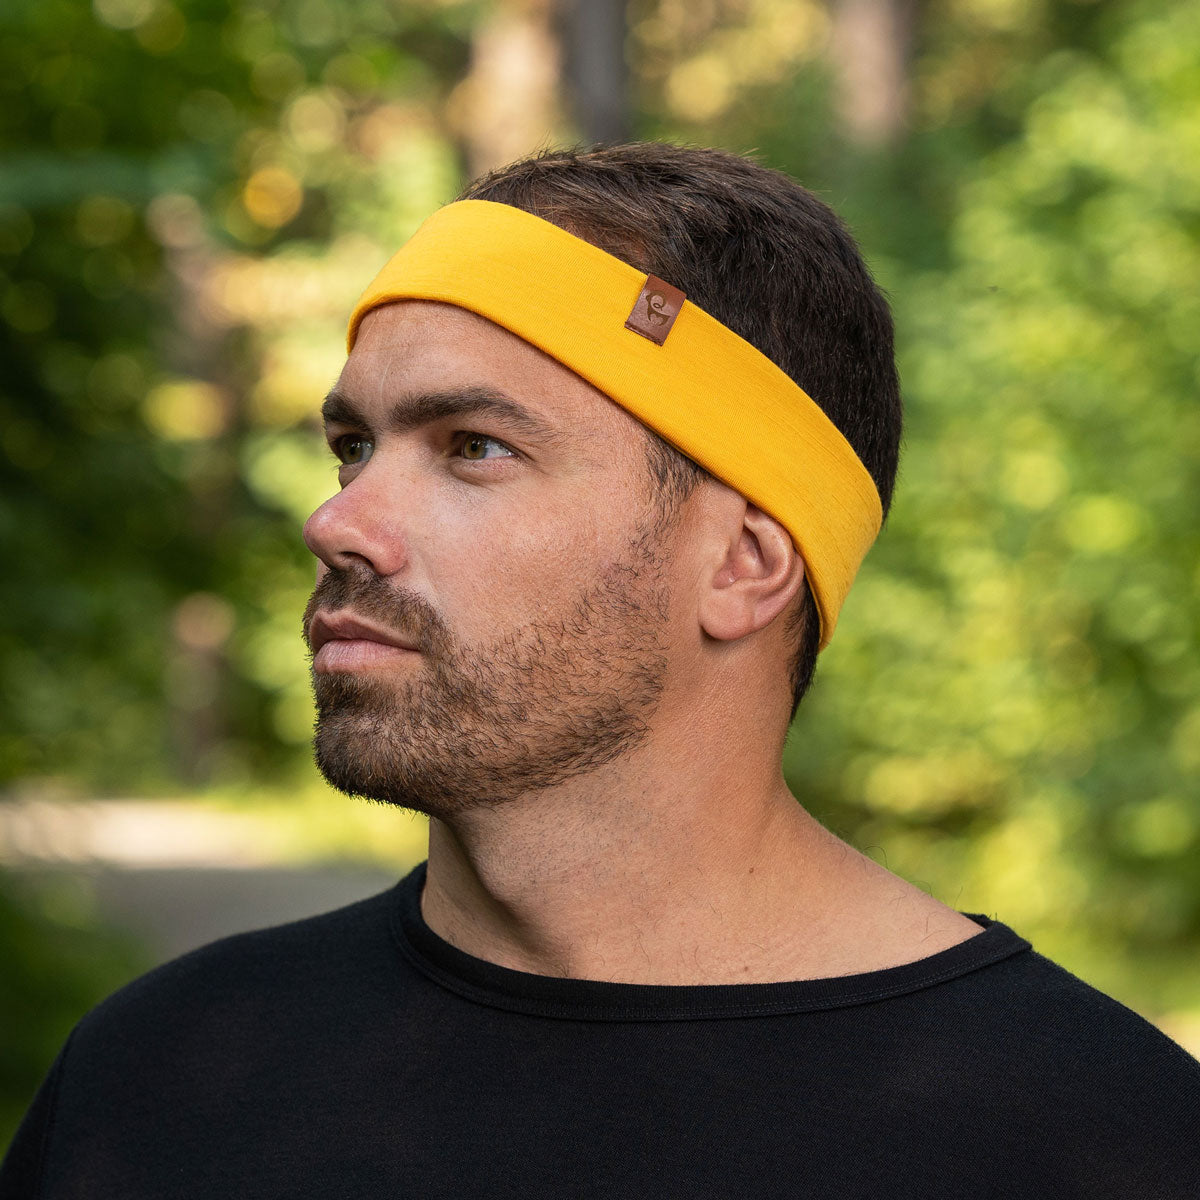 Sweat headbands for sporty men and women; Popular options